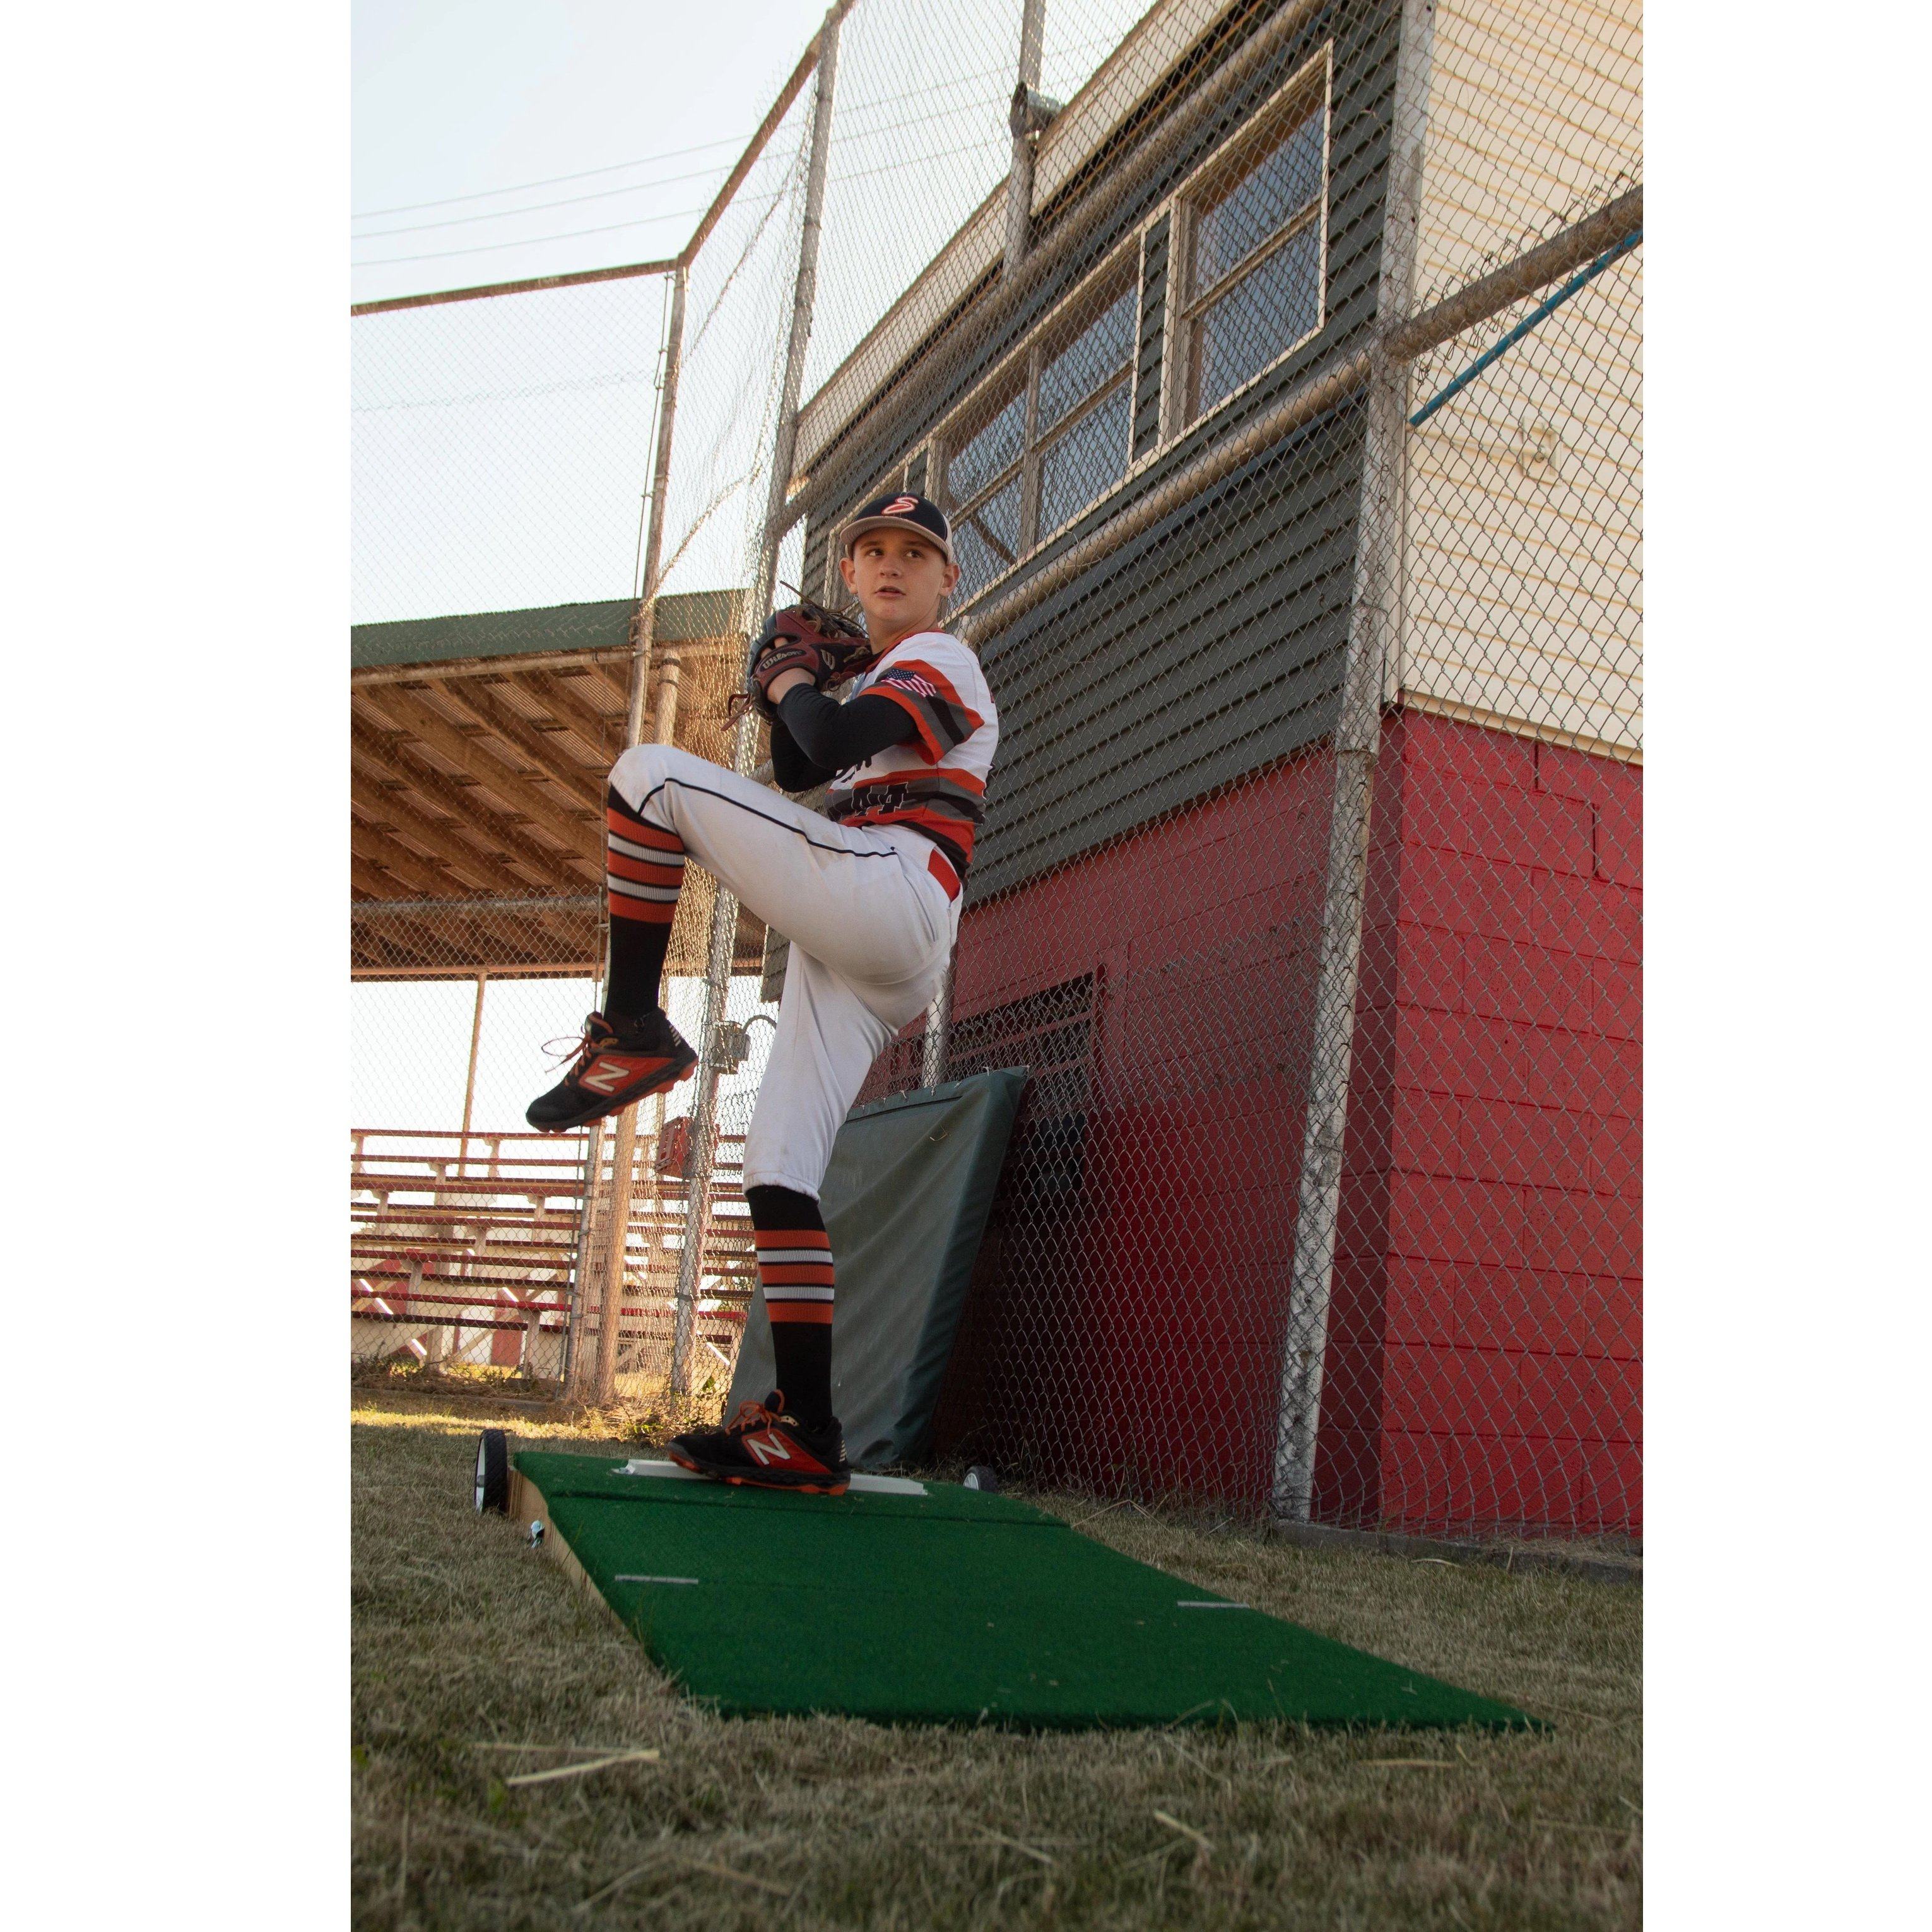 6" Youth Portable Baseball Pitching Mound